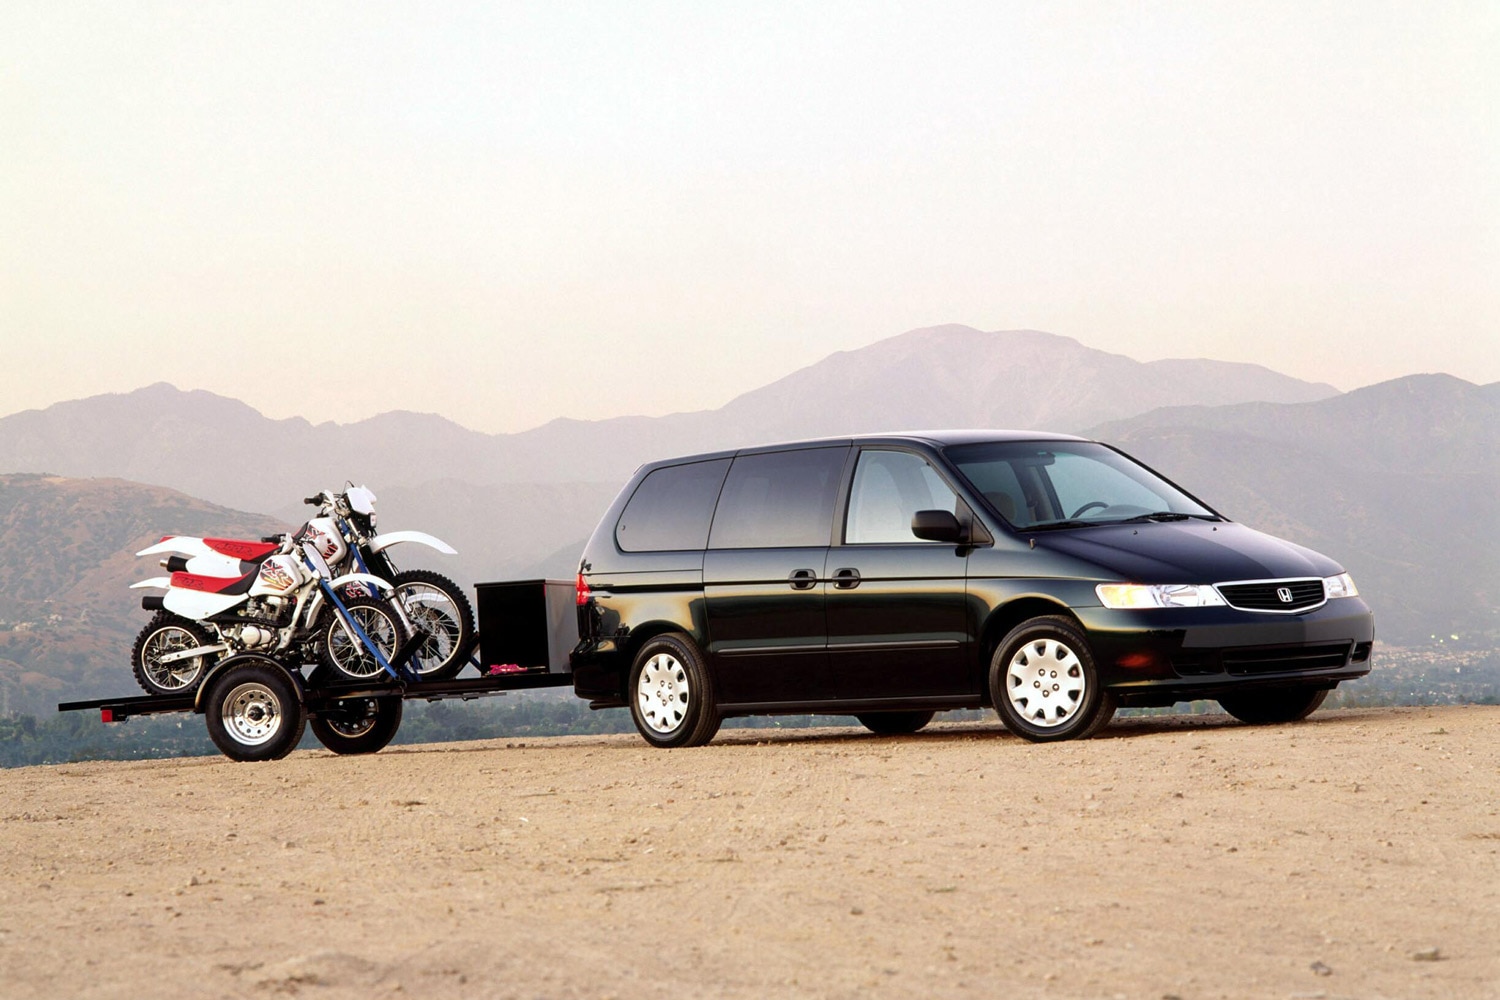 A black Honda minivan tows a black trailer holding two Honda dirt bikes.